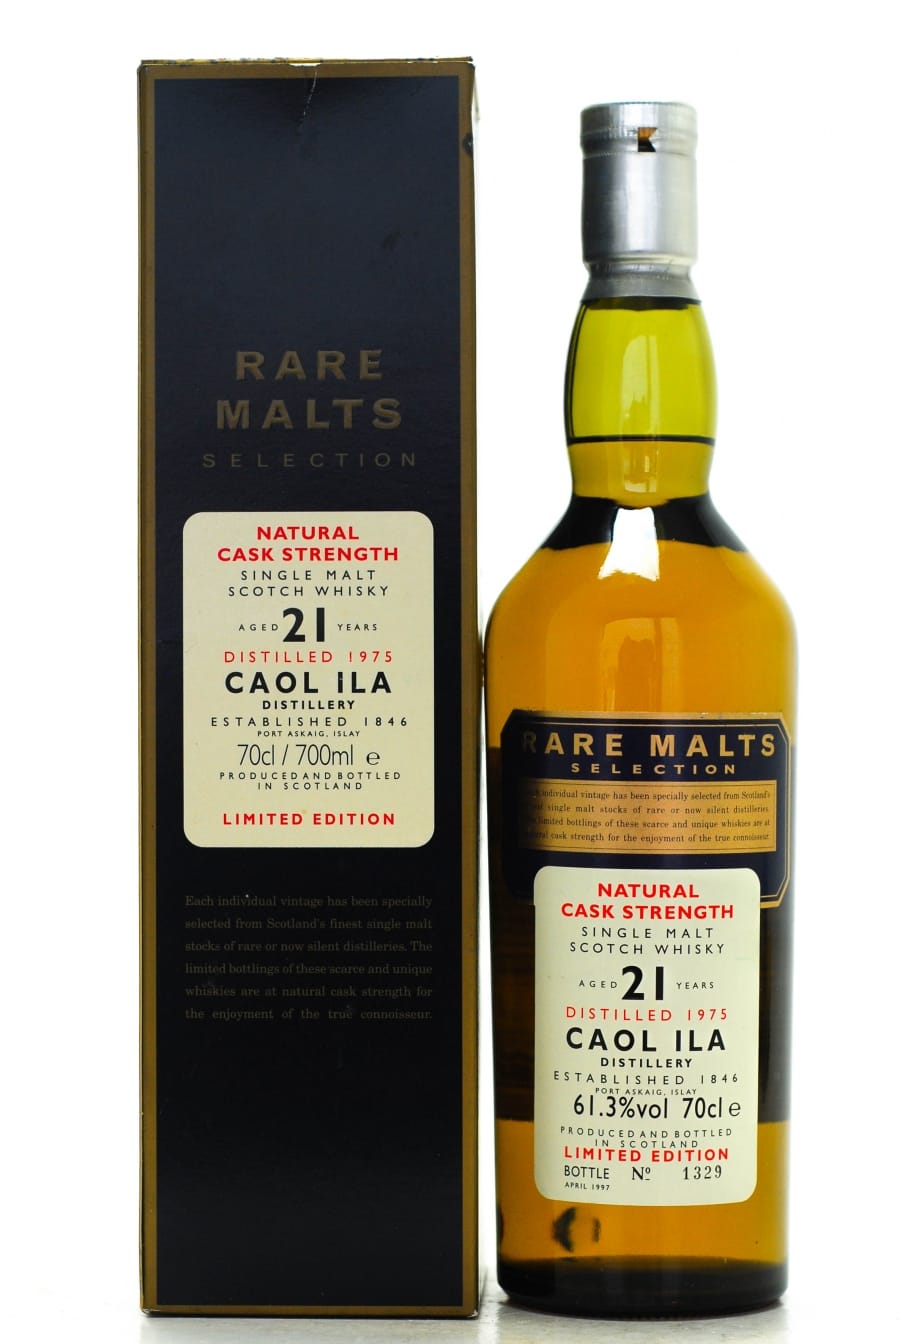 Caol Ila - 21 Years Old Rare Malts Selection 61.3% 1975 Perfect